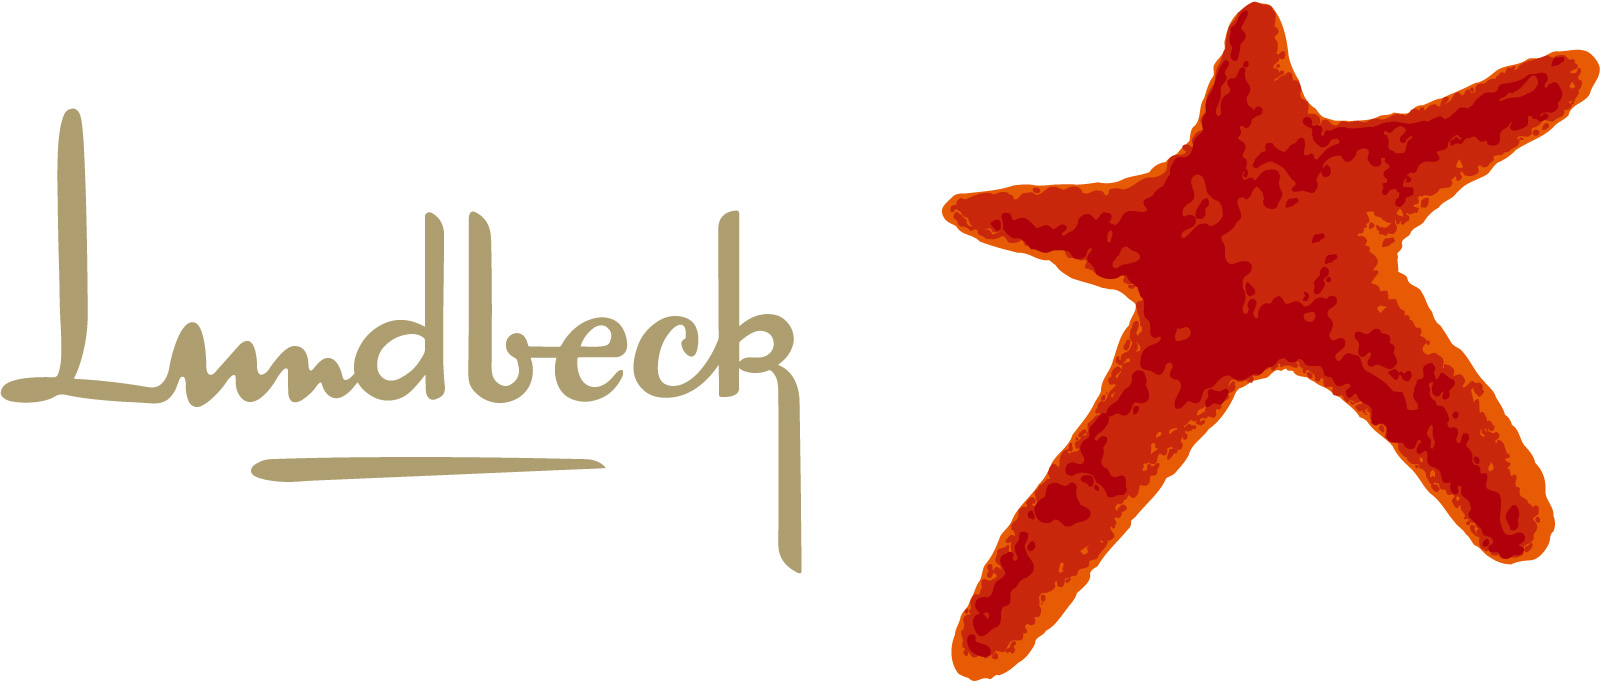 Lundbeck Brand Logo